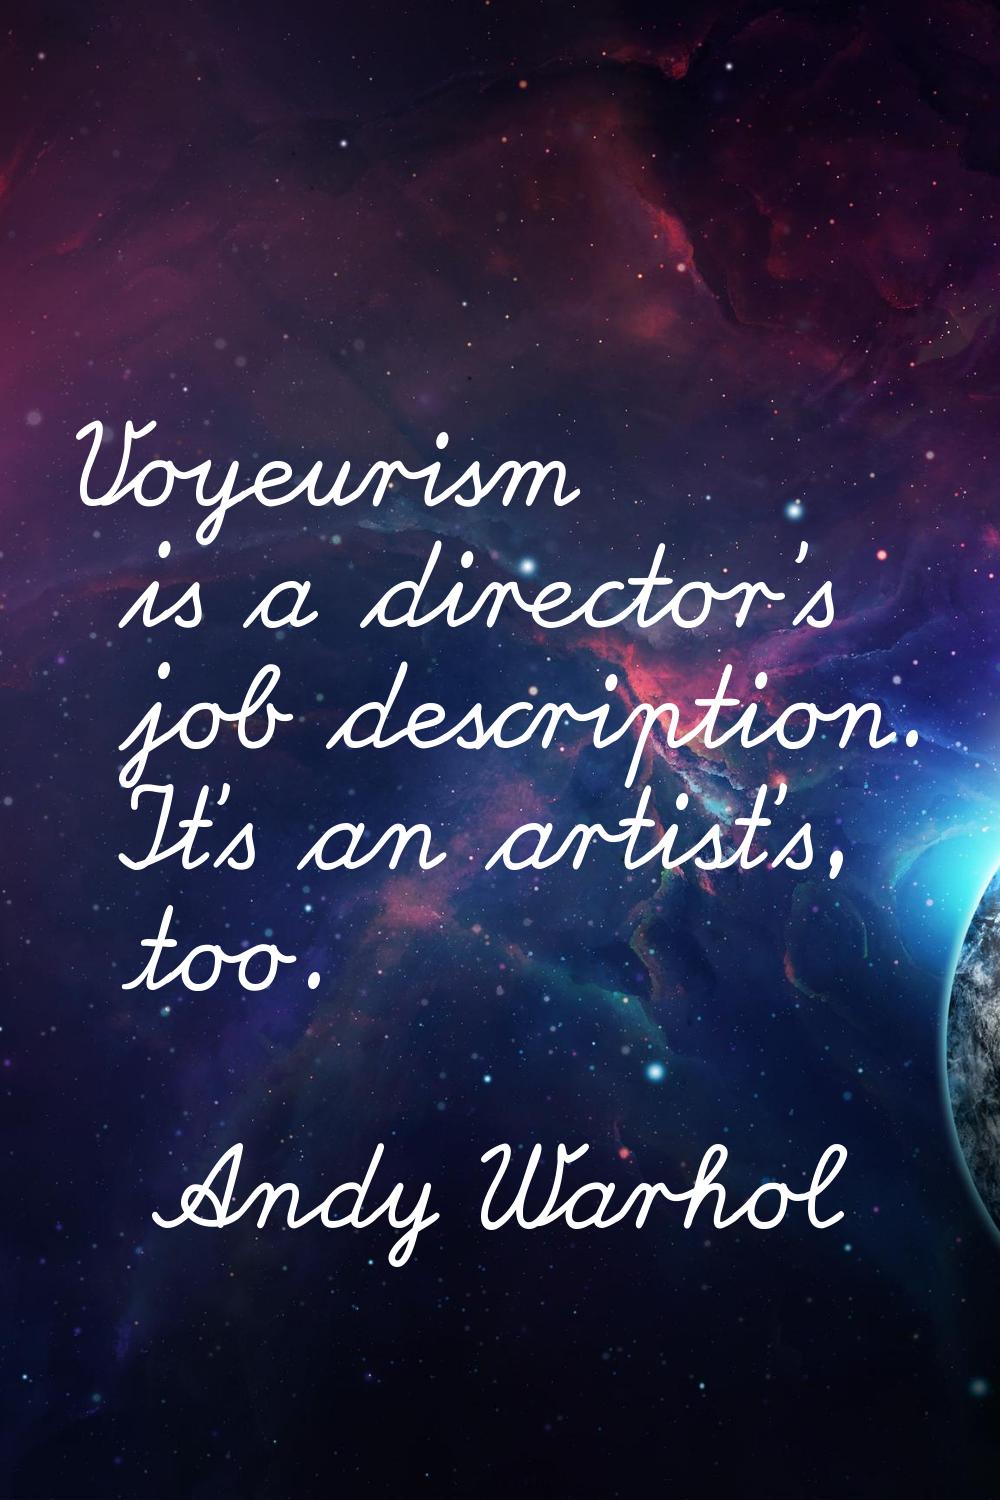 Voyeurism is a director's job description. It's an artist's, too.